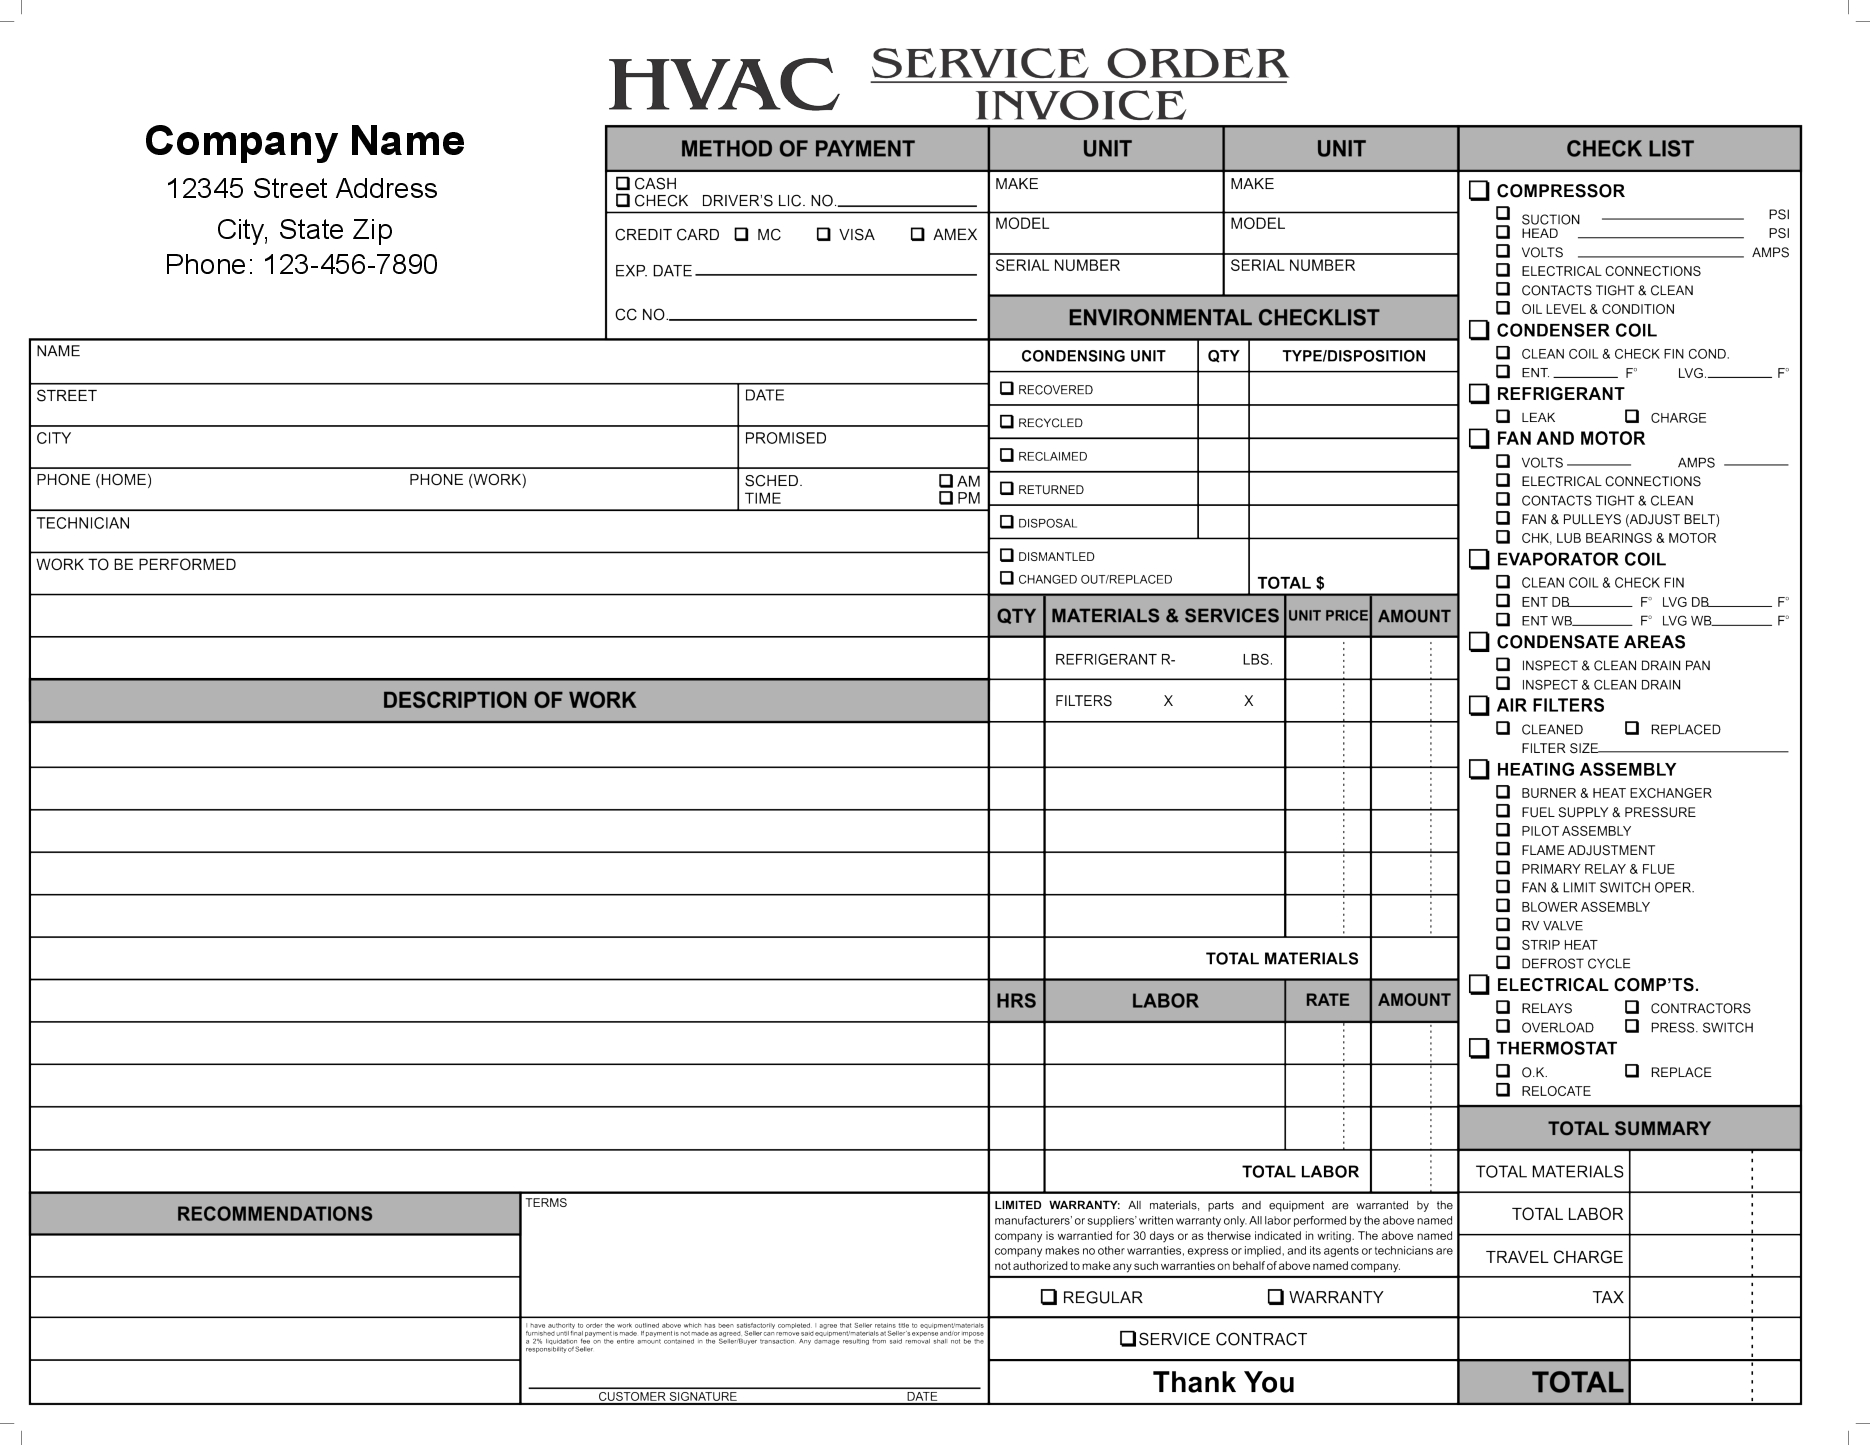 HVAC Service Order Invoice Templat Db excel